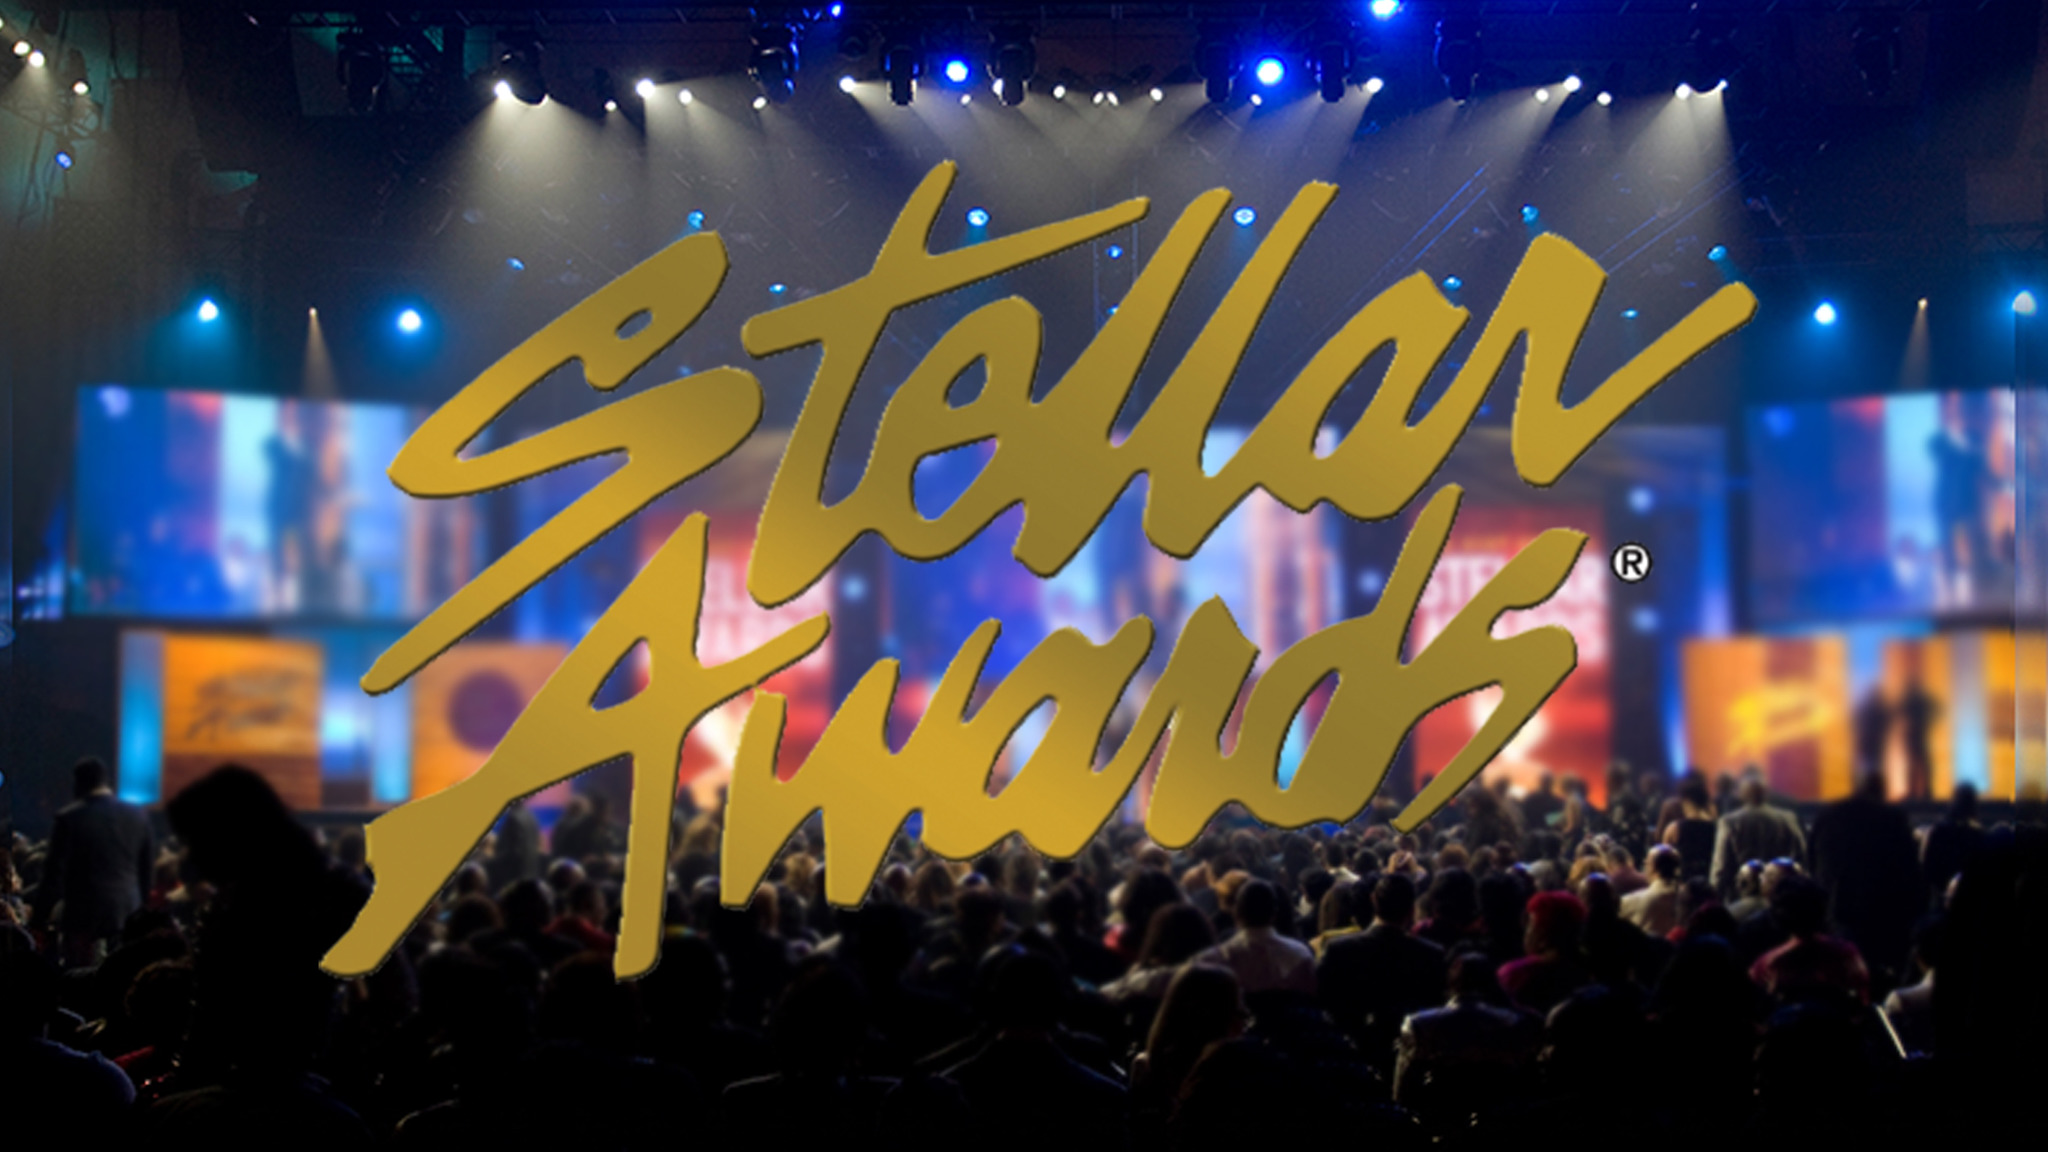 Stellar Gospel Music Awards Tickets, 2023 Concert Tour Dates